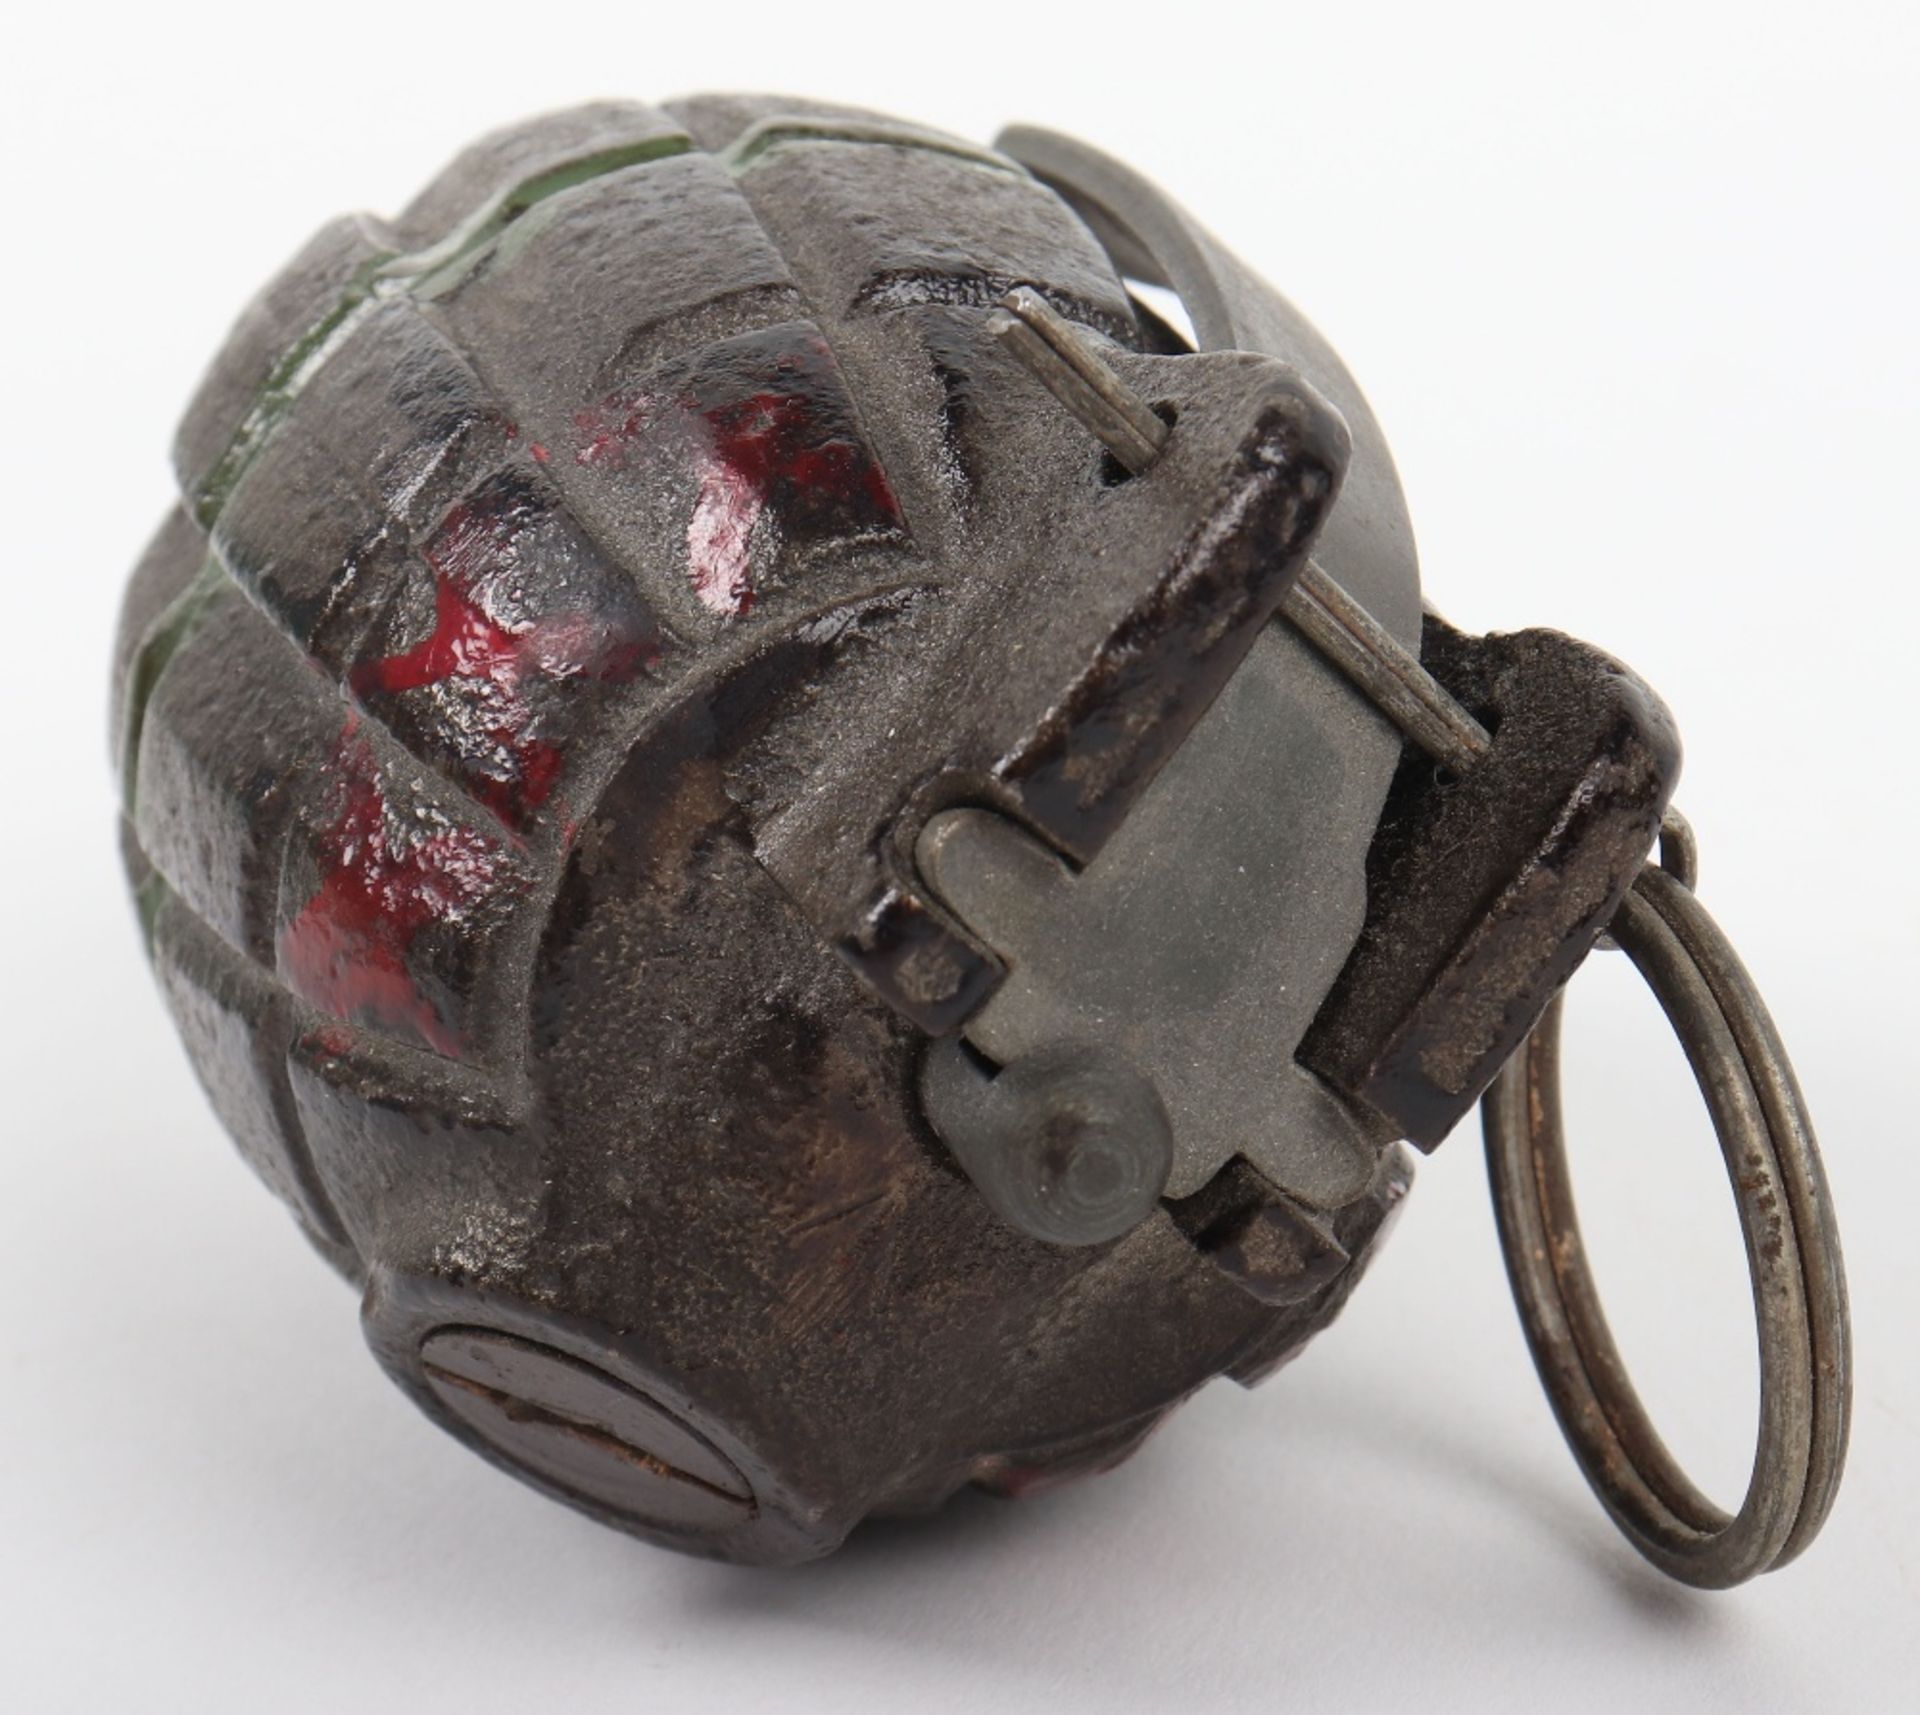 Inert British Mills Hand Grenade - Image 3 of 4